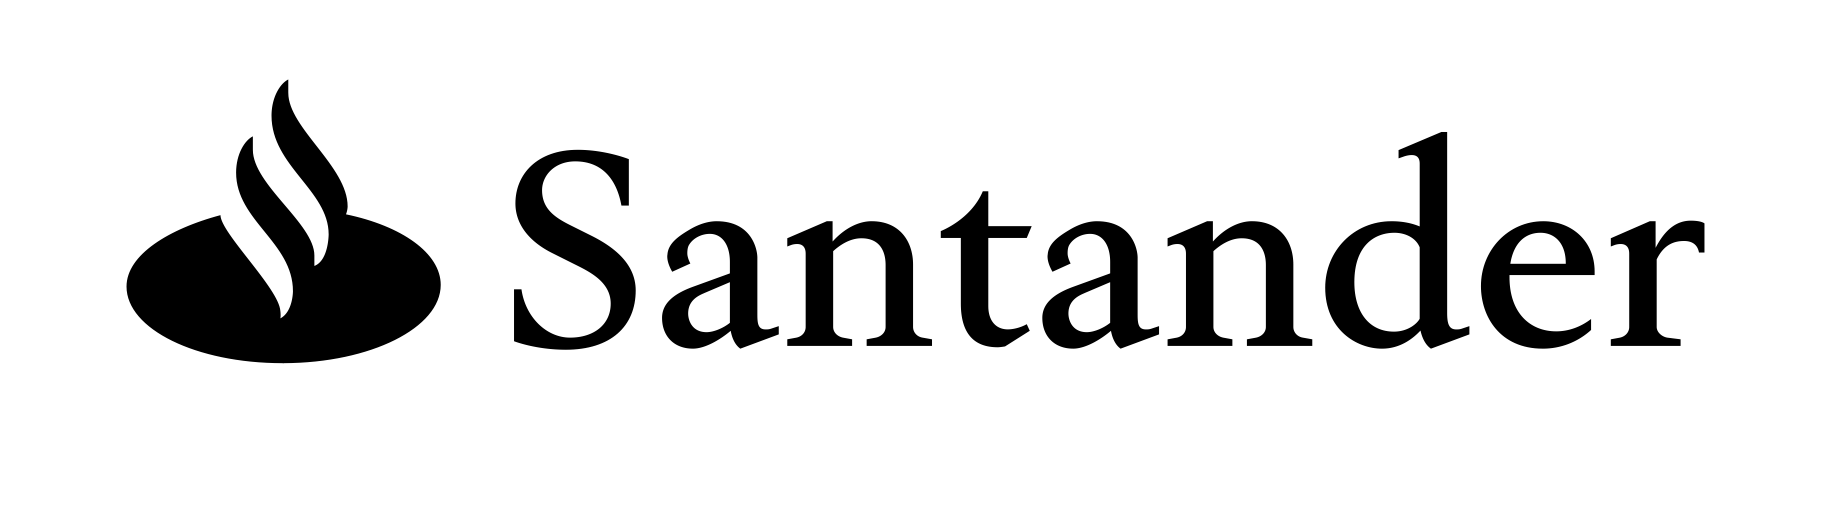 Santanderbanklogo